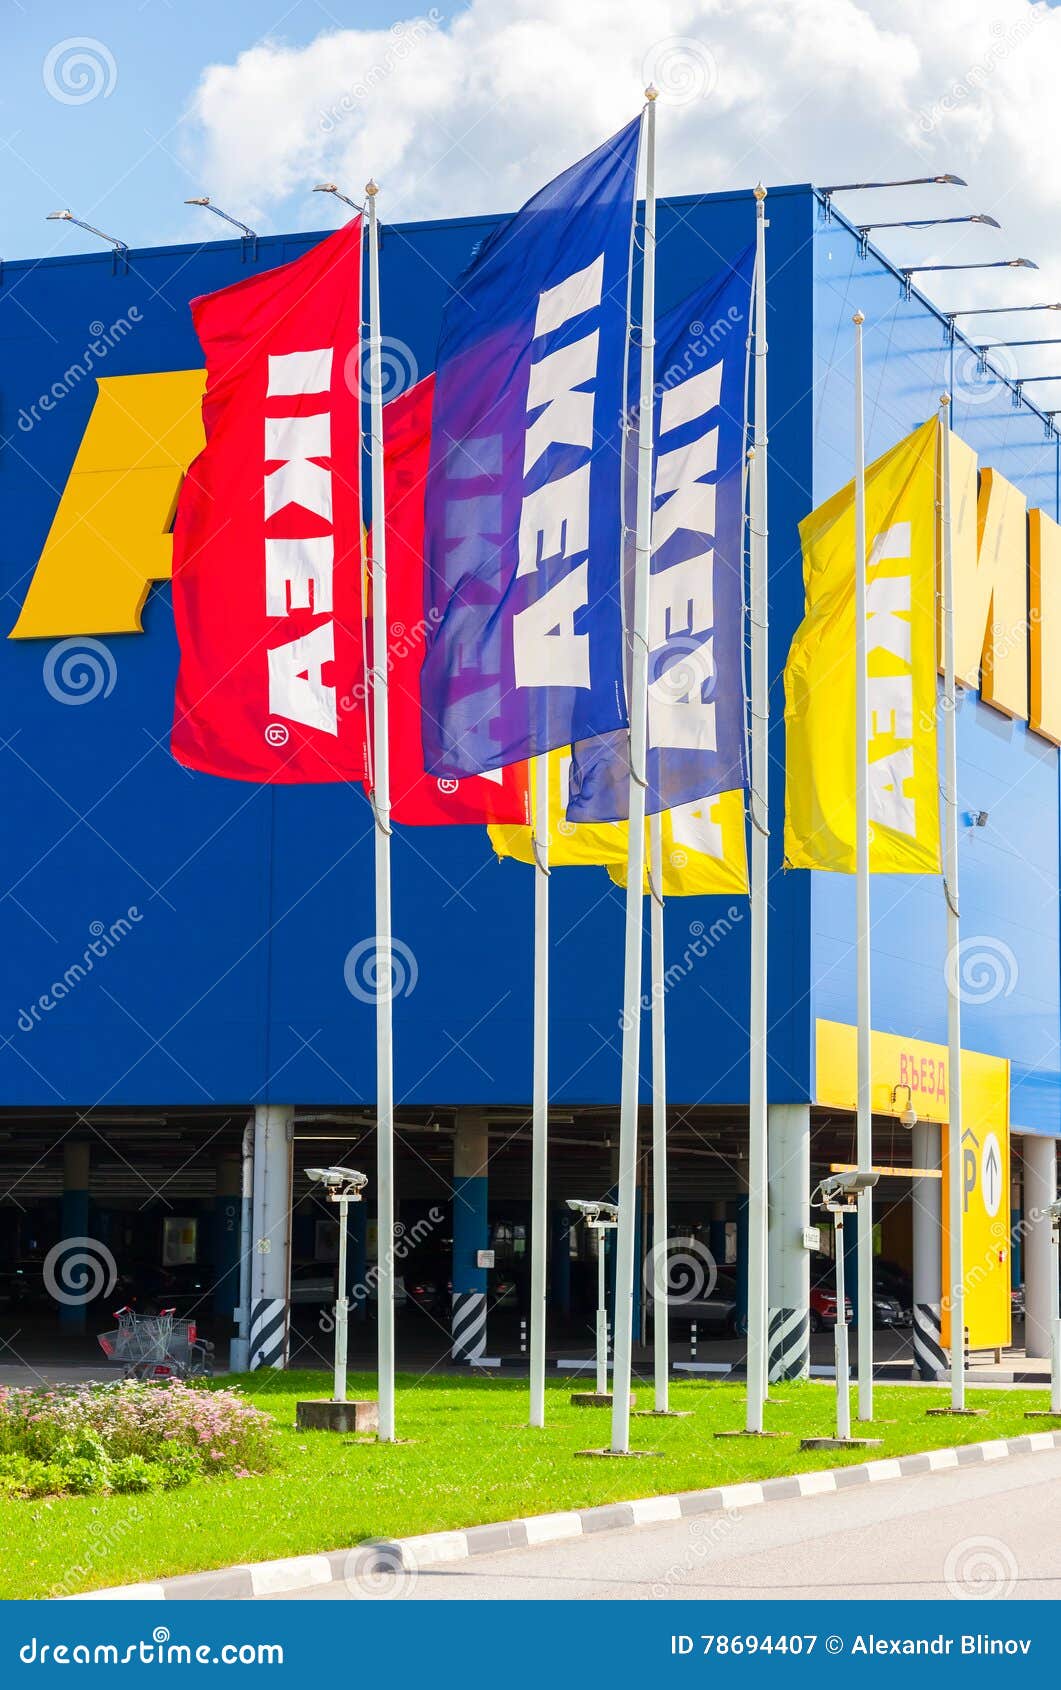 IKEA Flags Near The IKEA Samara Store. IKEA Is The World's Large Editorial Photography - Image ...